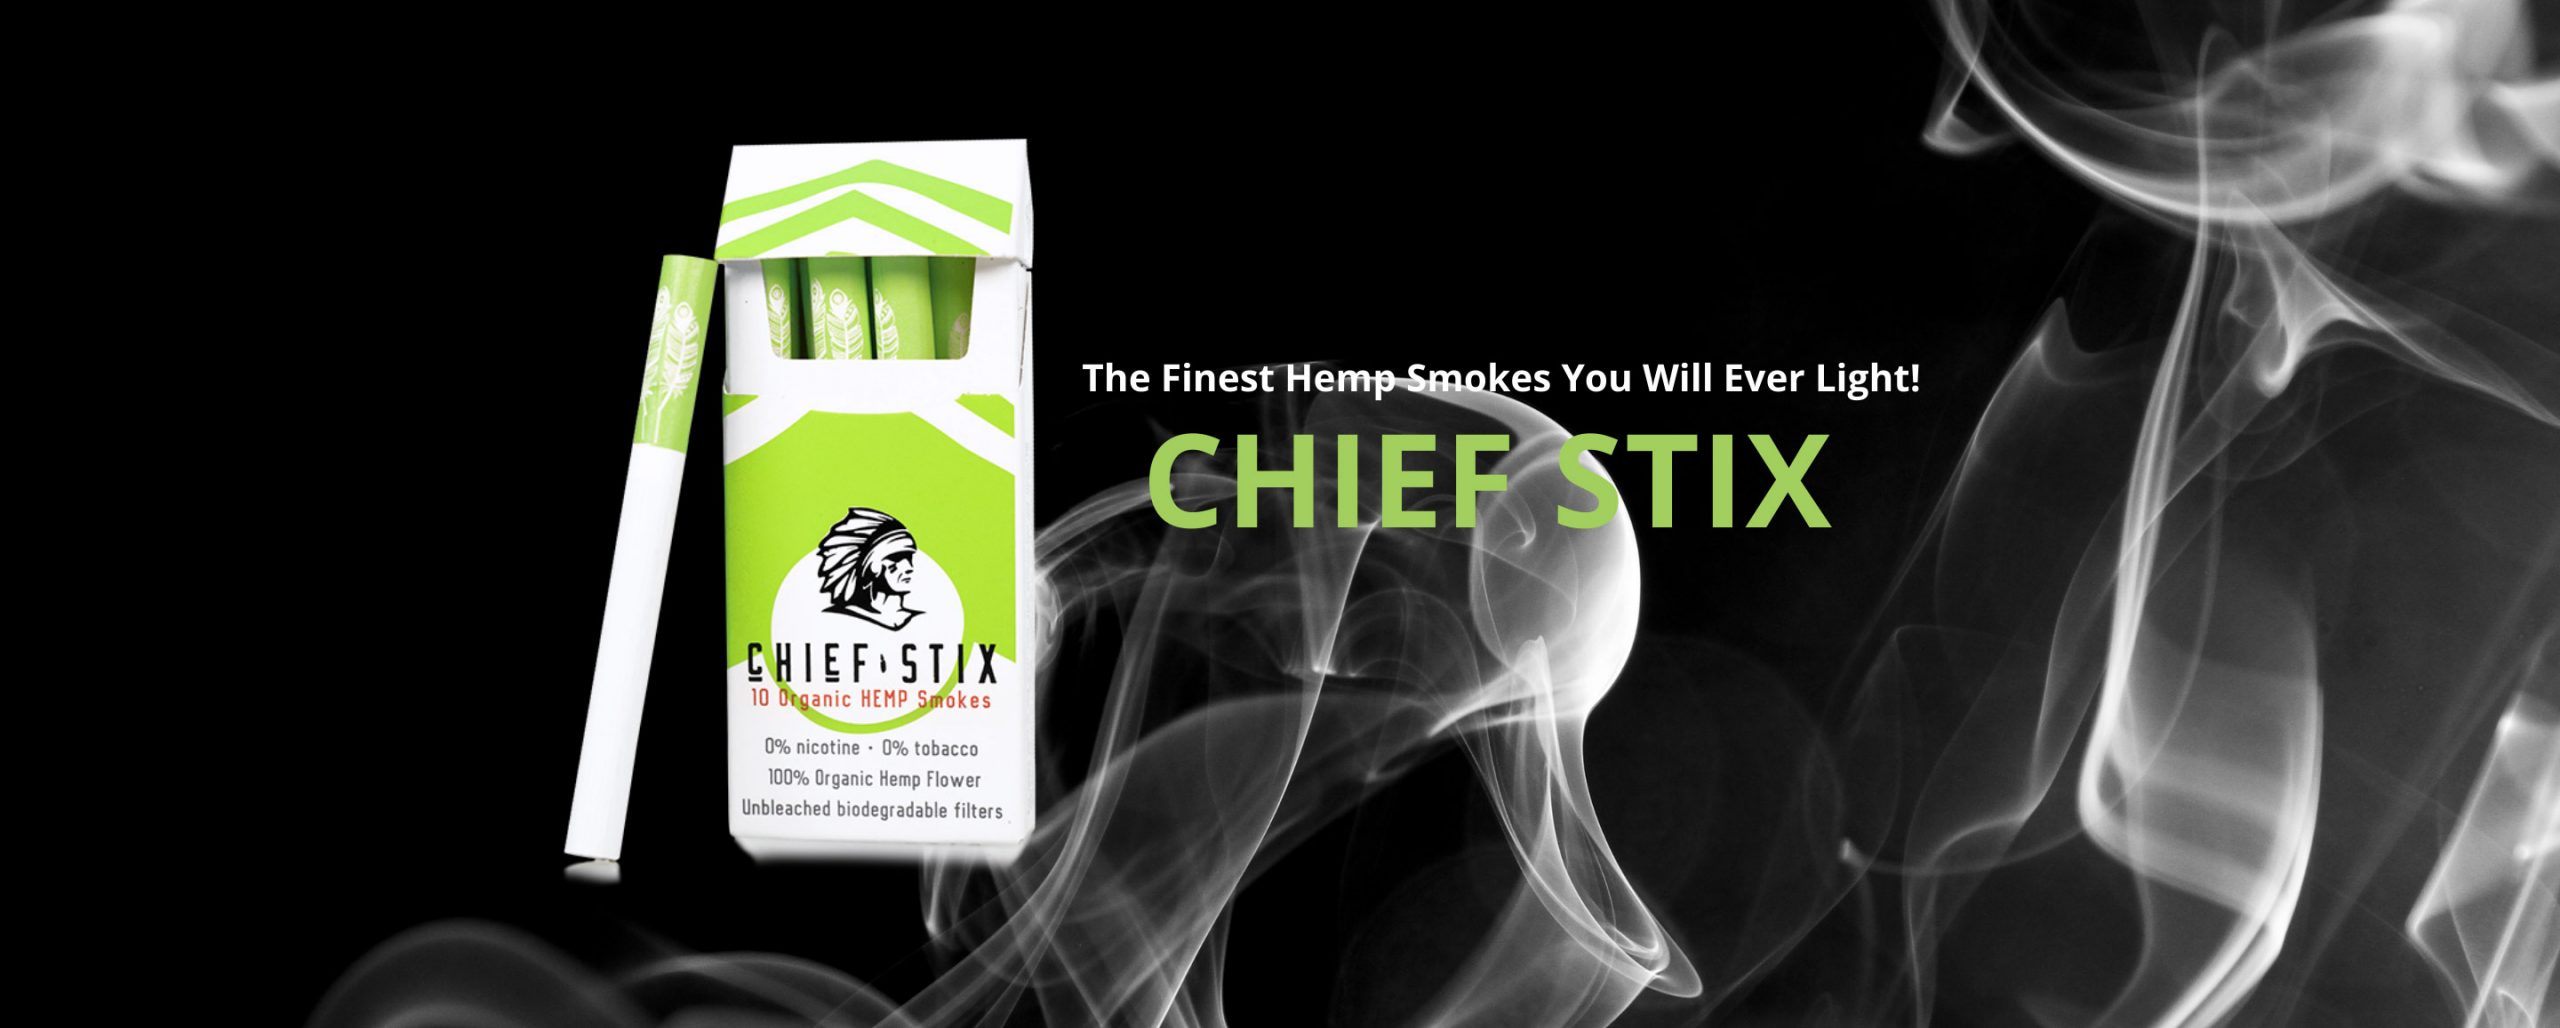 Chief Stix Banner, Organic Hemp Smokes from Tallchief Hemp